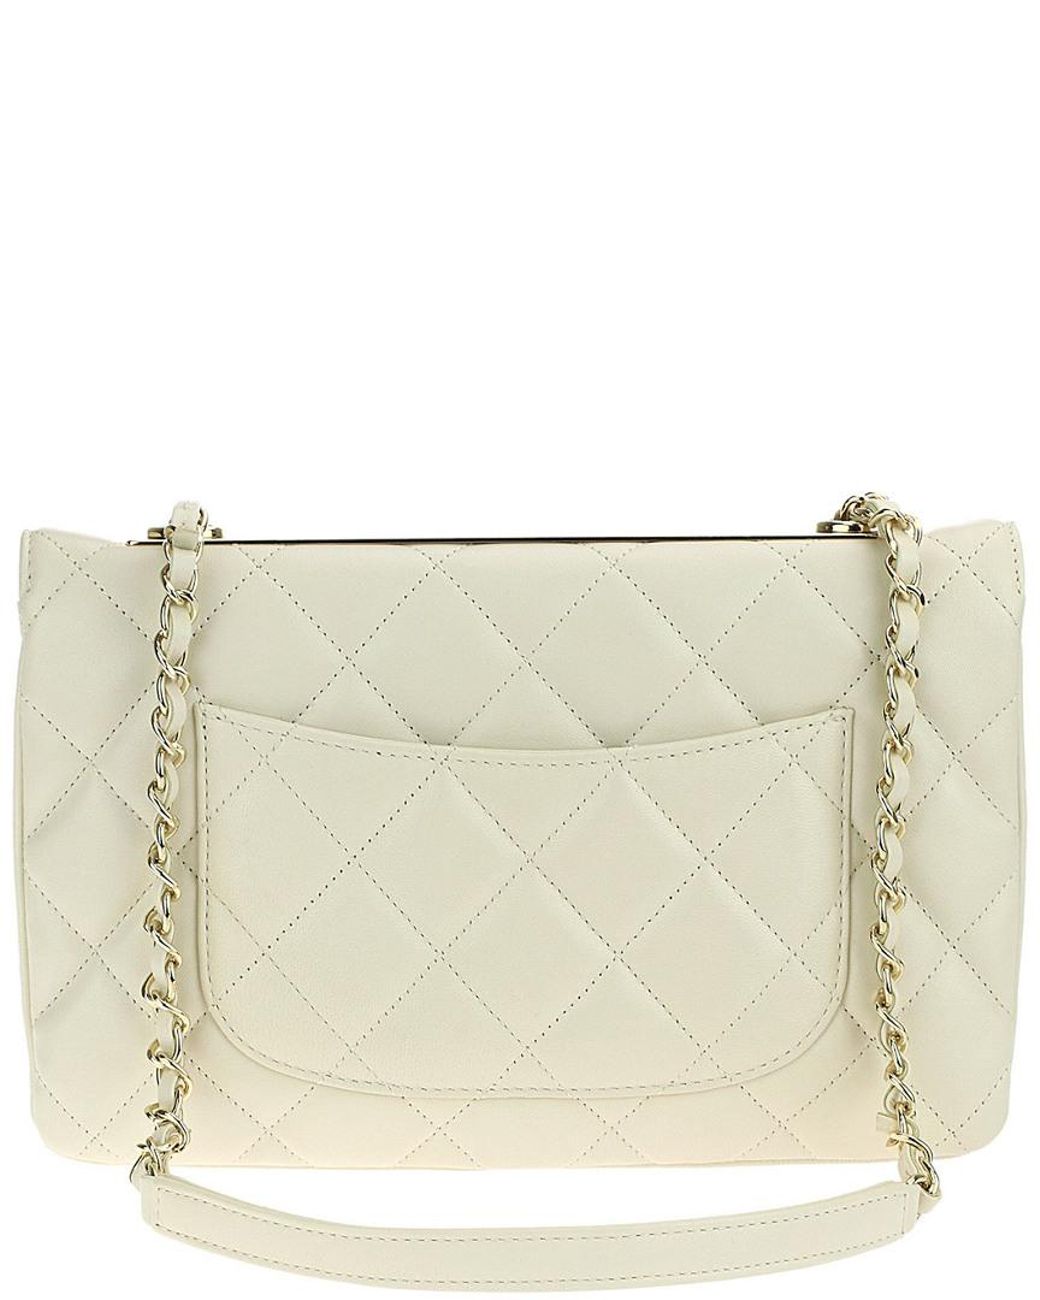 Chanel Beige Lambskin Leather Trendy Cc Small Single Flap Bag